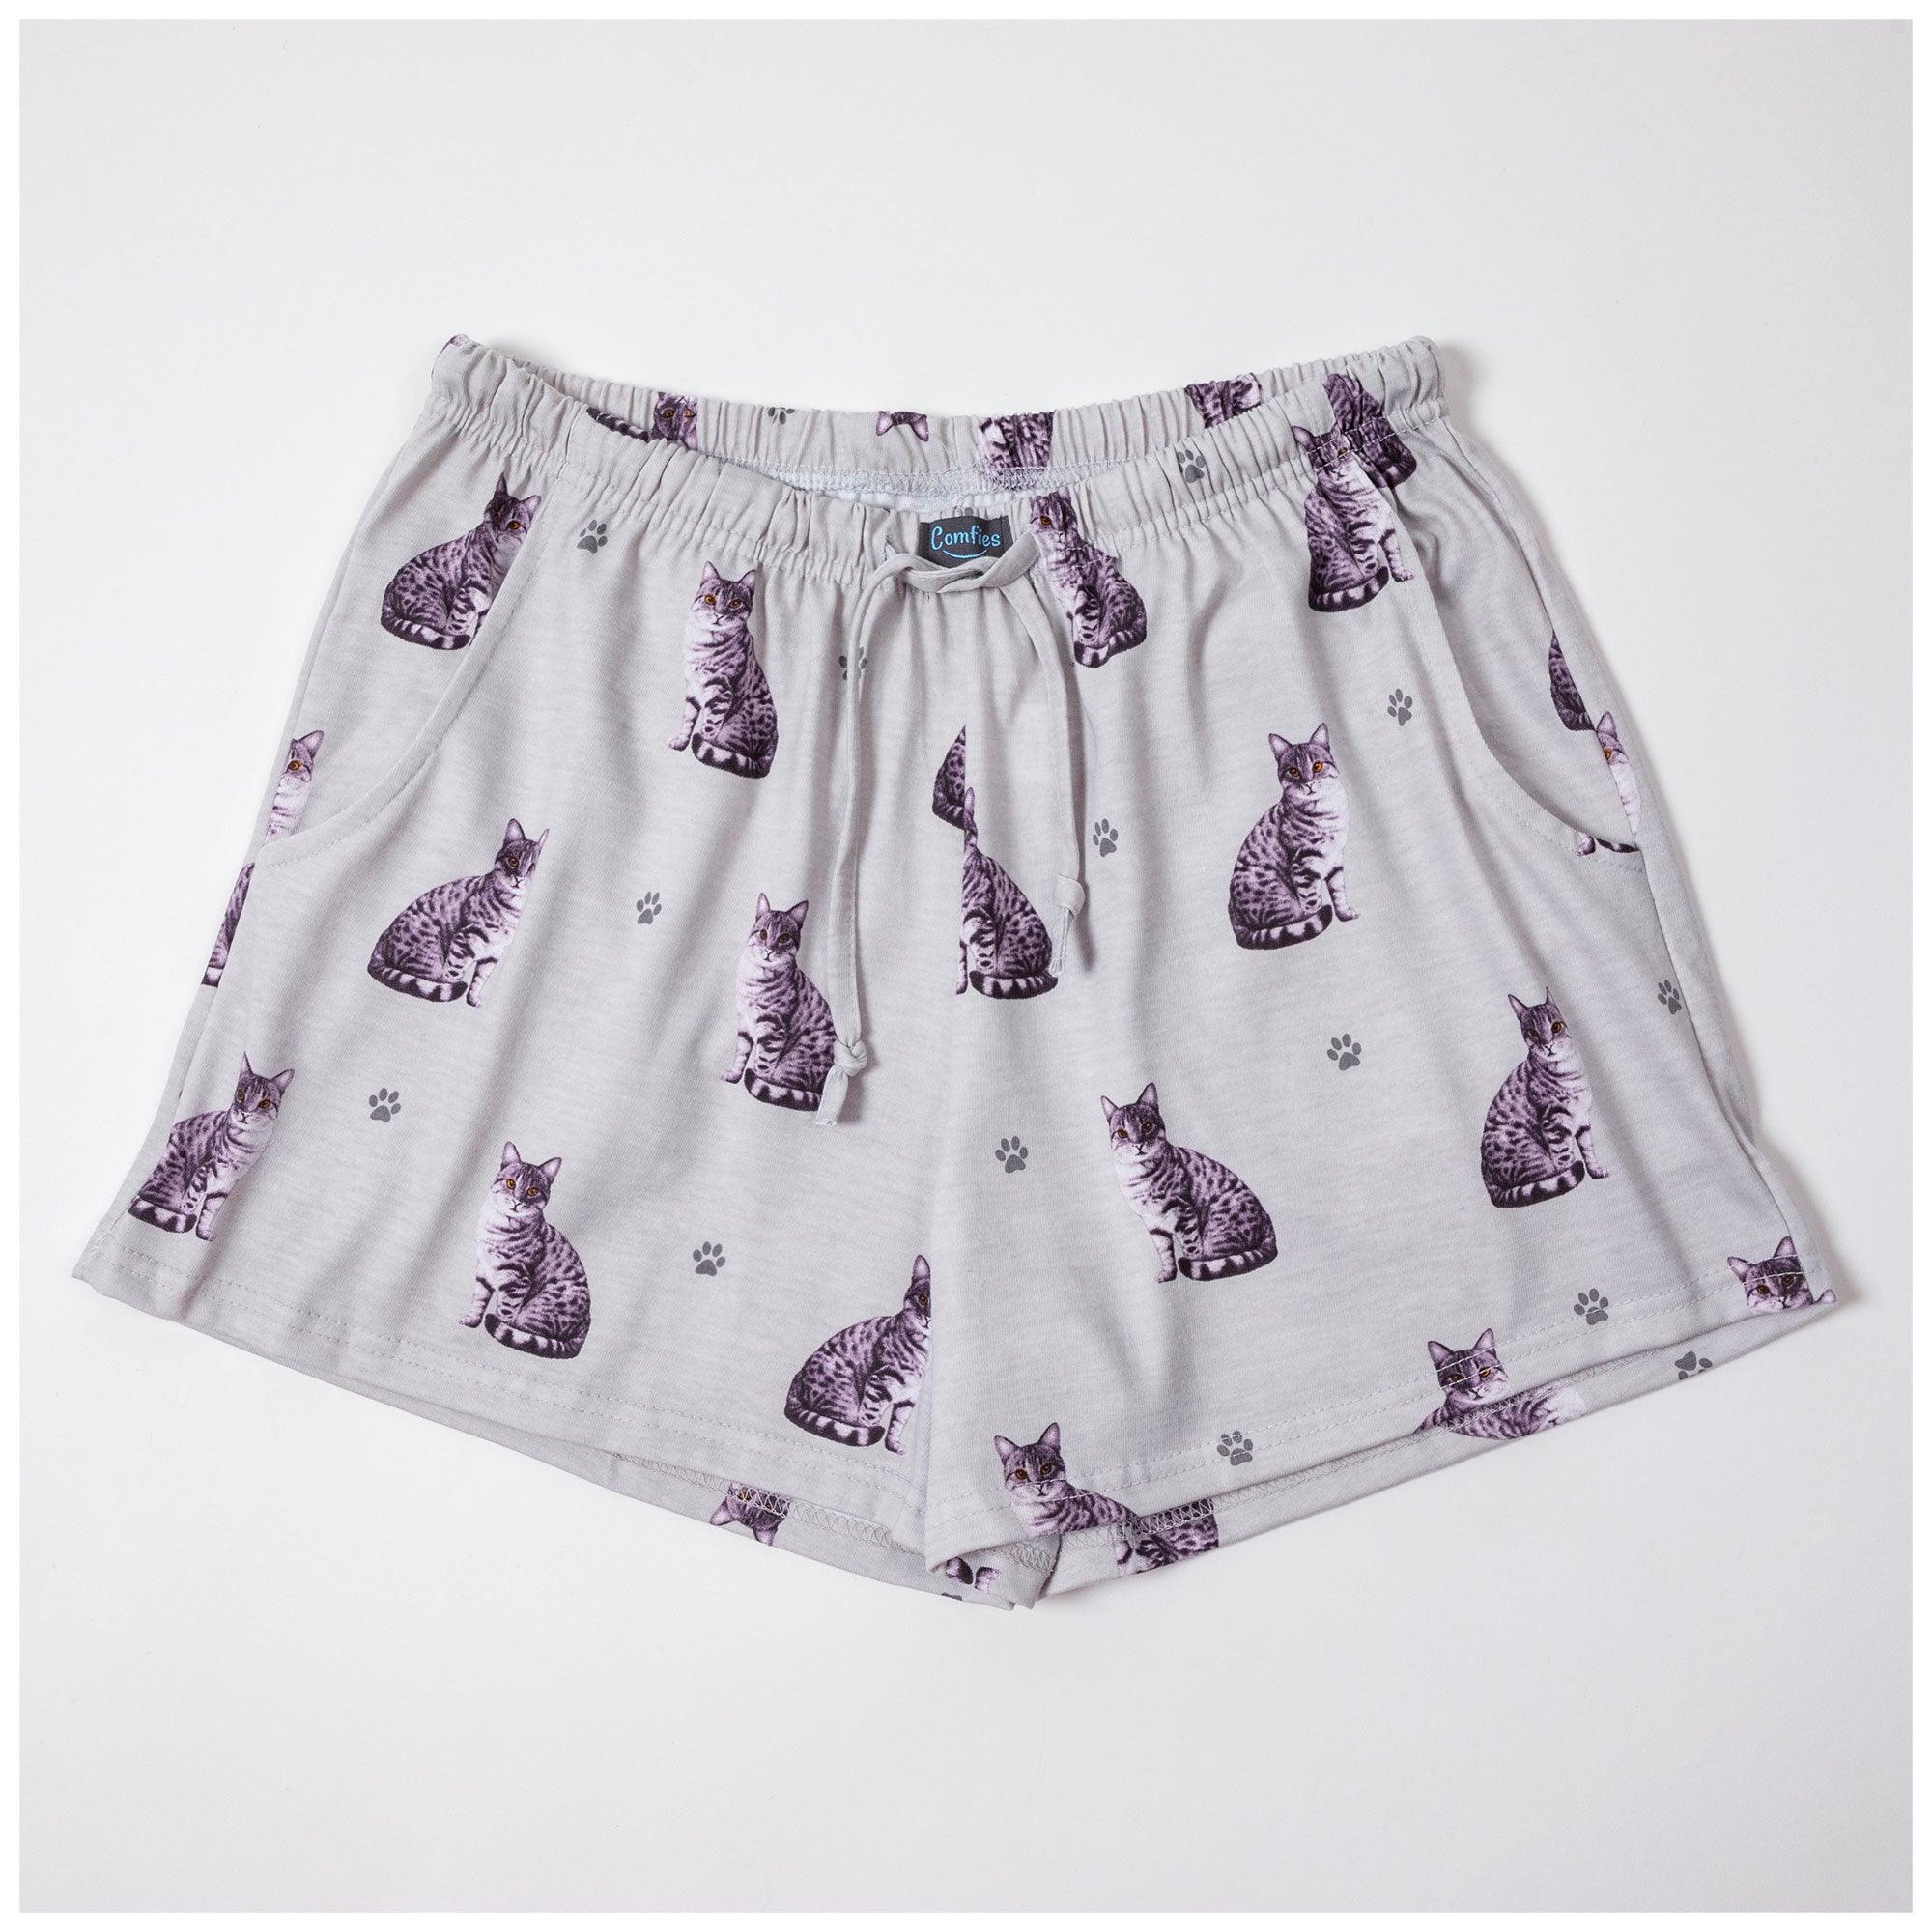 Cute Cat Lounge Shorts - Silver Tabby Cat - S